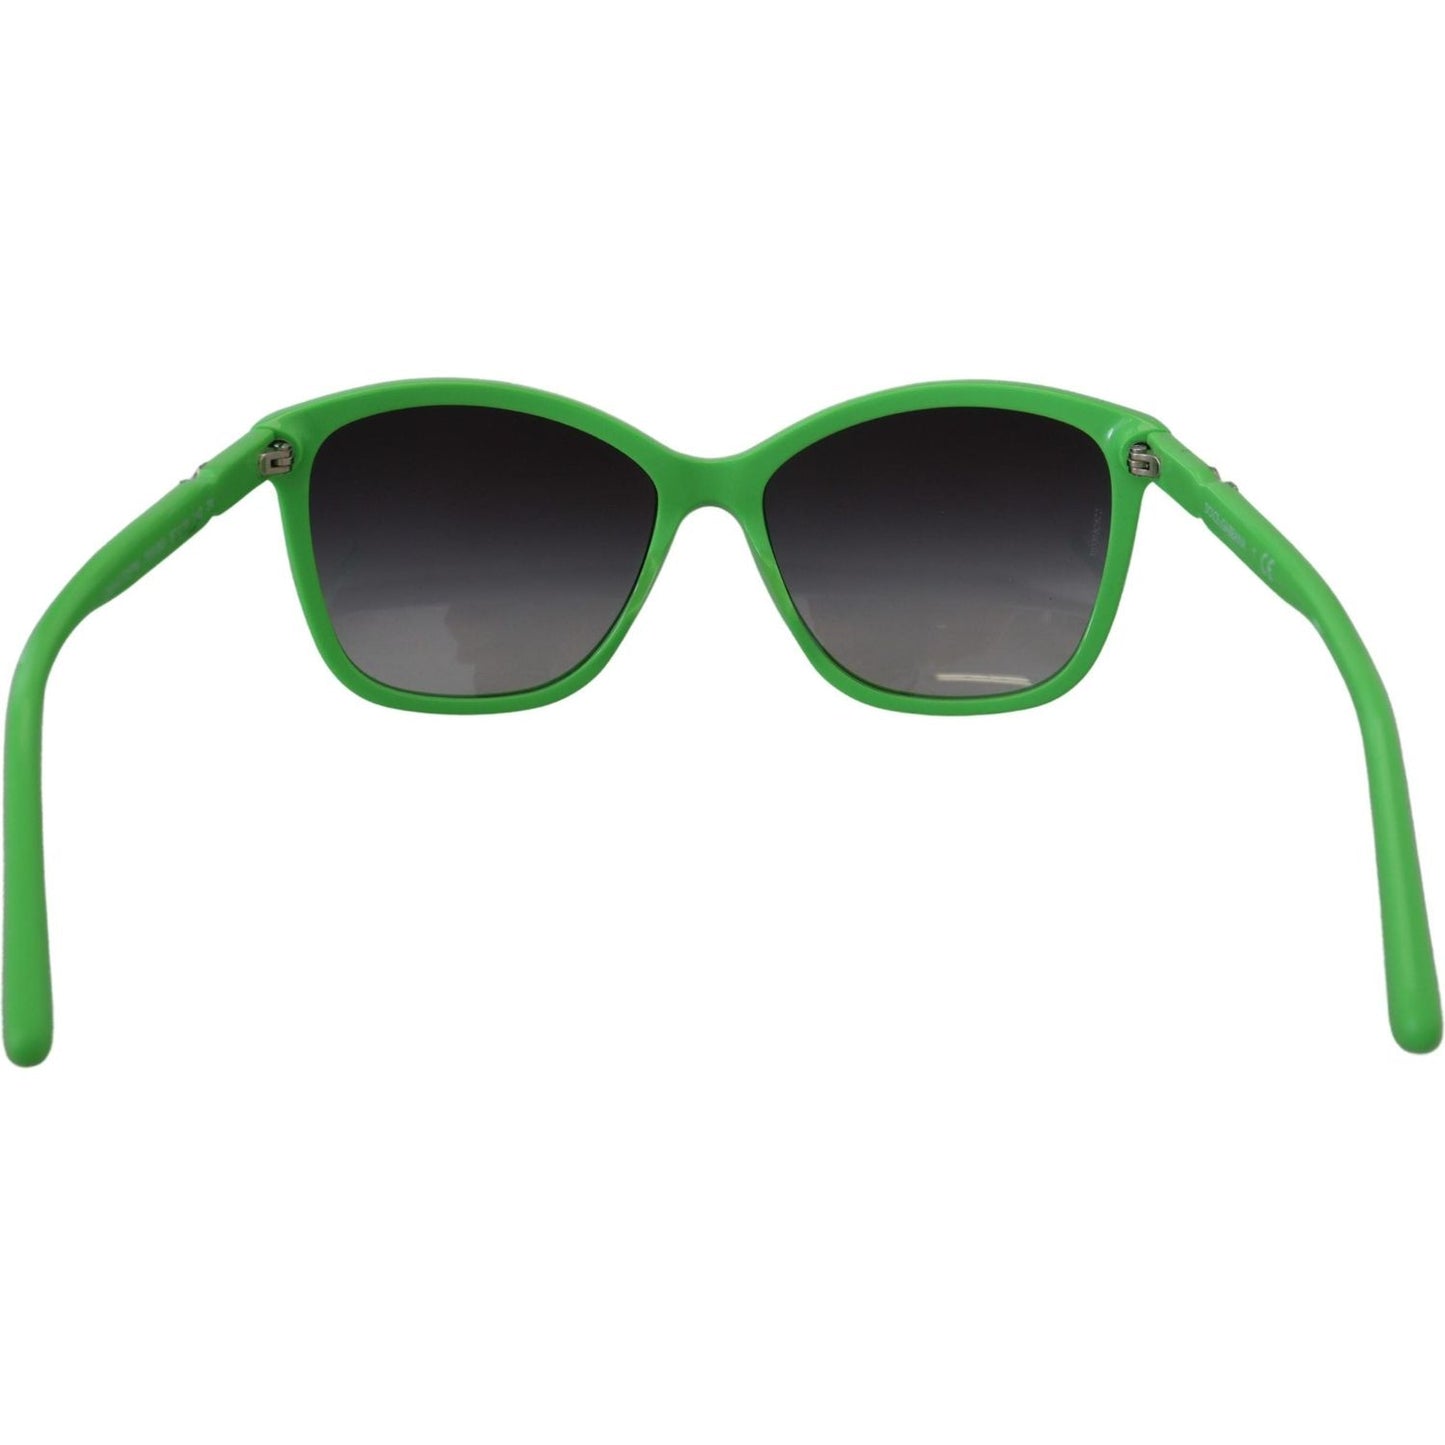 Dolce & Gabbana Chic Green Acetate Round Sunglasses green-acetate-frame-round-shades-dg4170pm-sunglasses IMG_3467-scaled-31562815-aa6.jpg